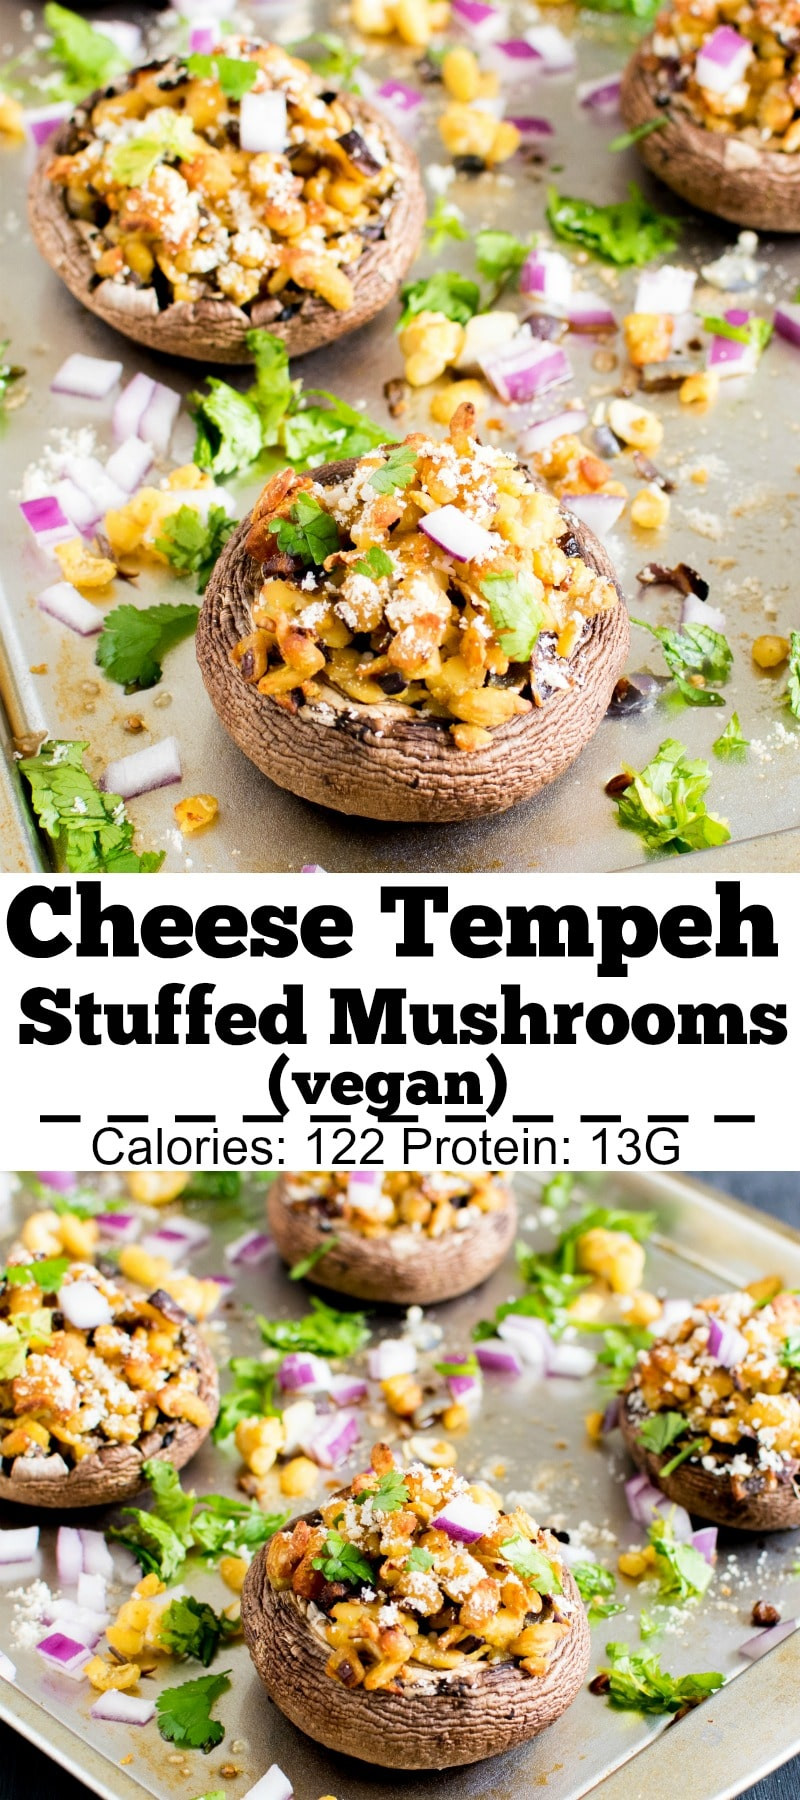 Do Portobello Mushrooms Have Protein
 Vegan Cheese and Tempeh Stuffed Portobello Mushrooms